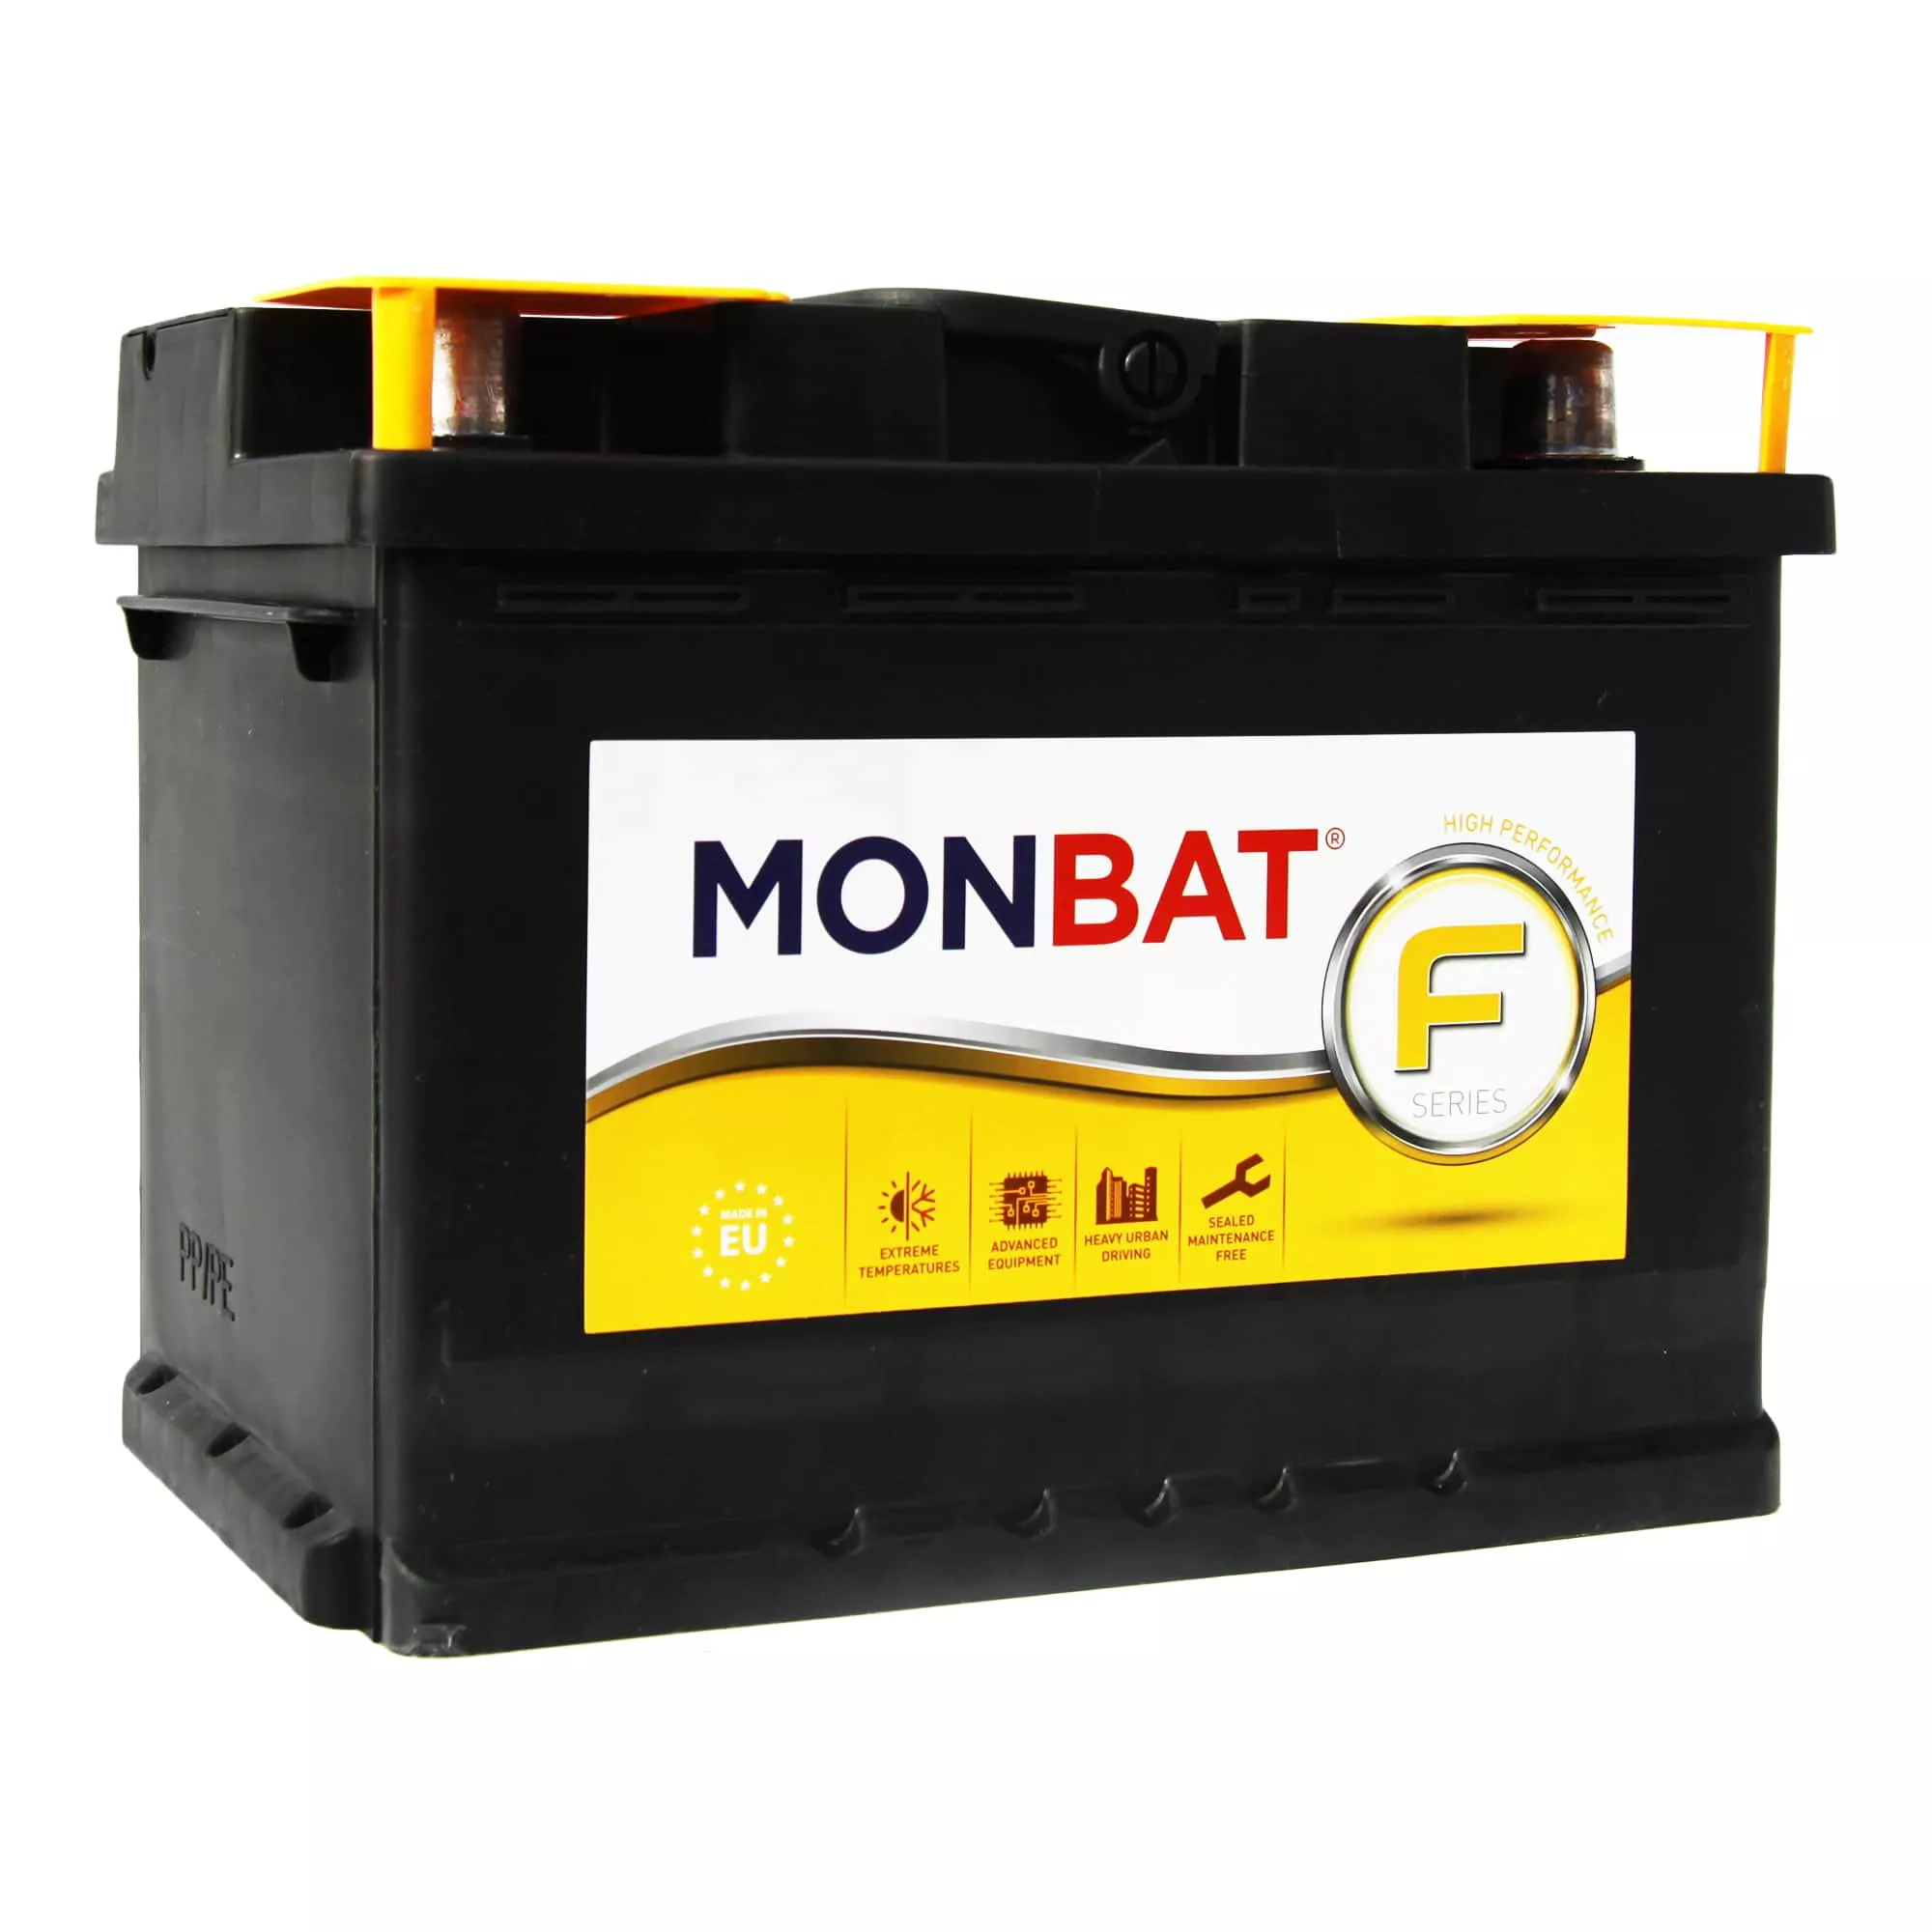 Аккумулятор Monbat 6CT-60 А Аз (A66L2P0) (560 078 060 SMF)